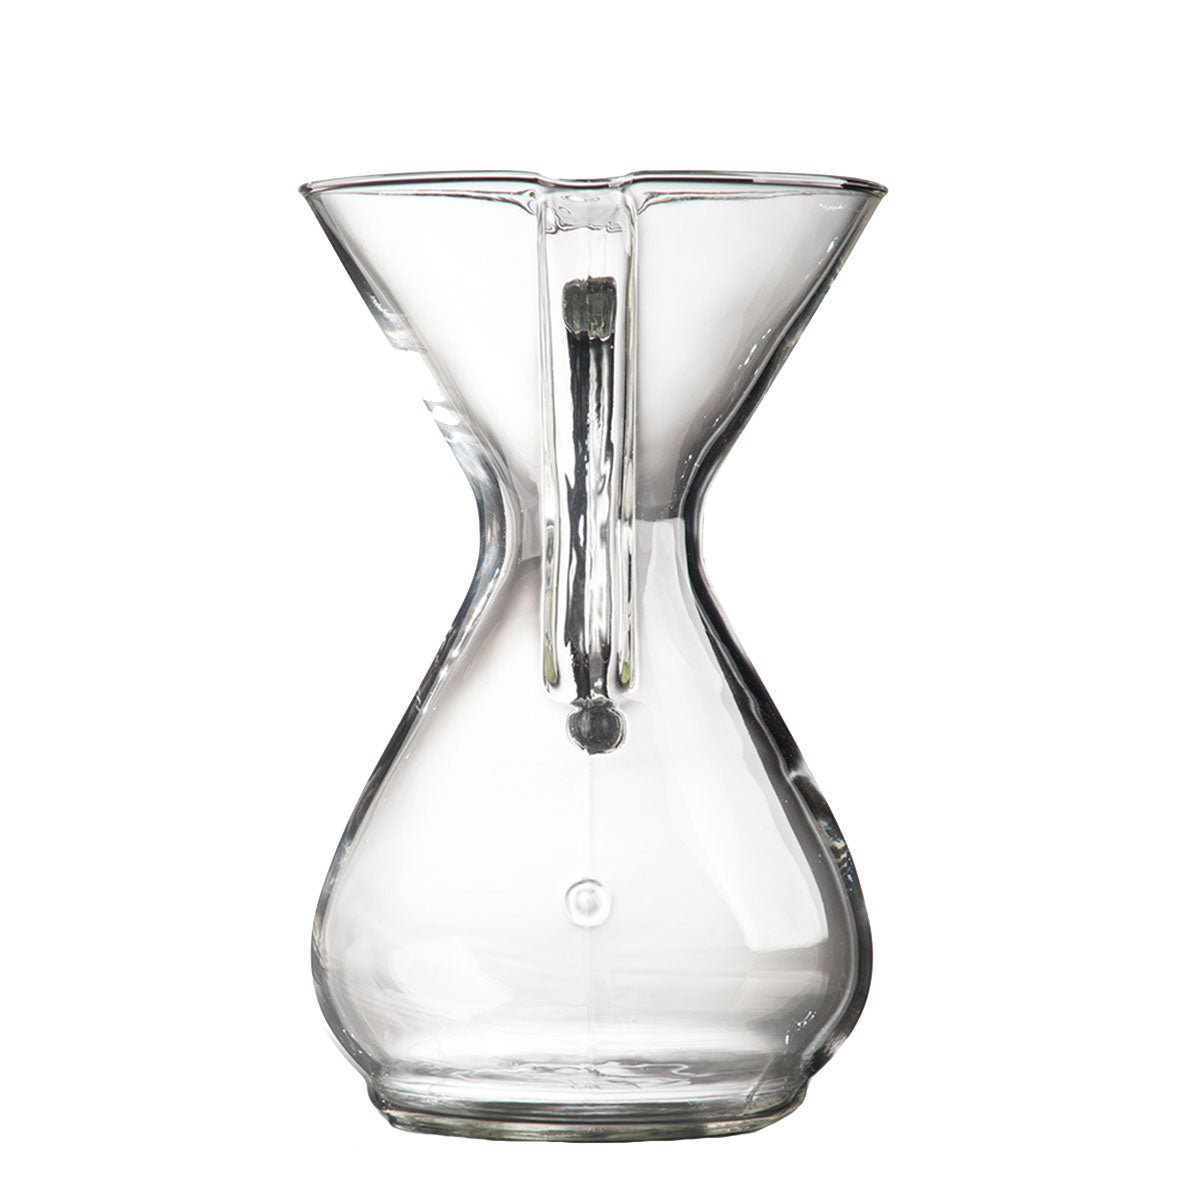 YAMA GLASS 3 CUP TABLETOP SIPHON COFFEE MAKER (ALCOHOL BURNER) — Luxio